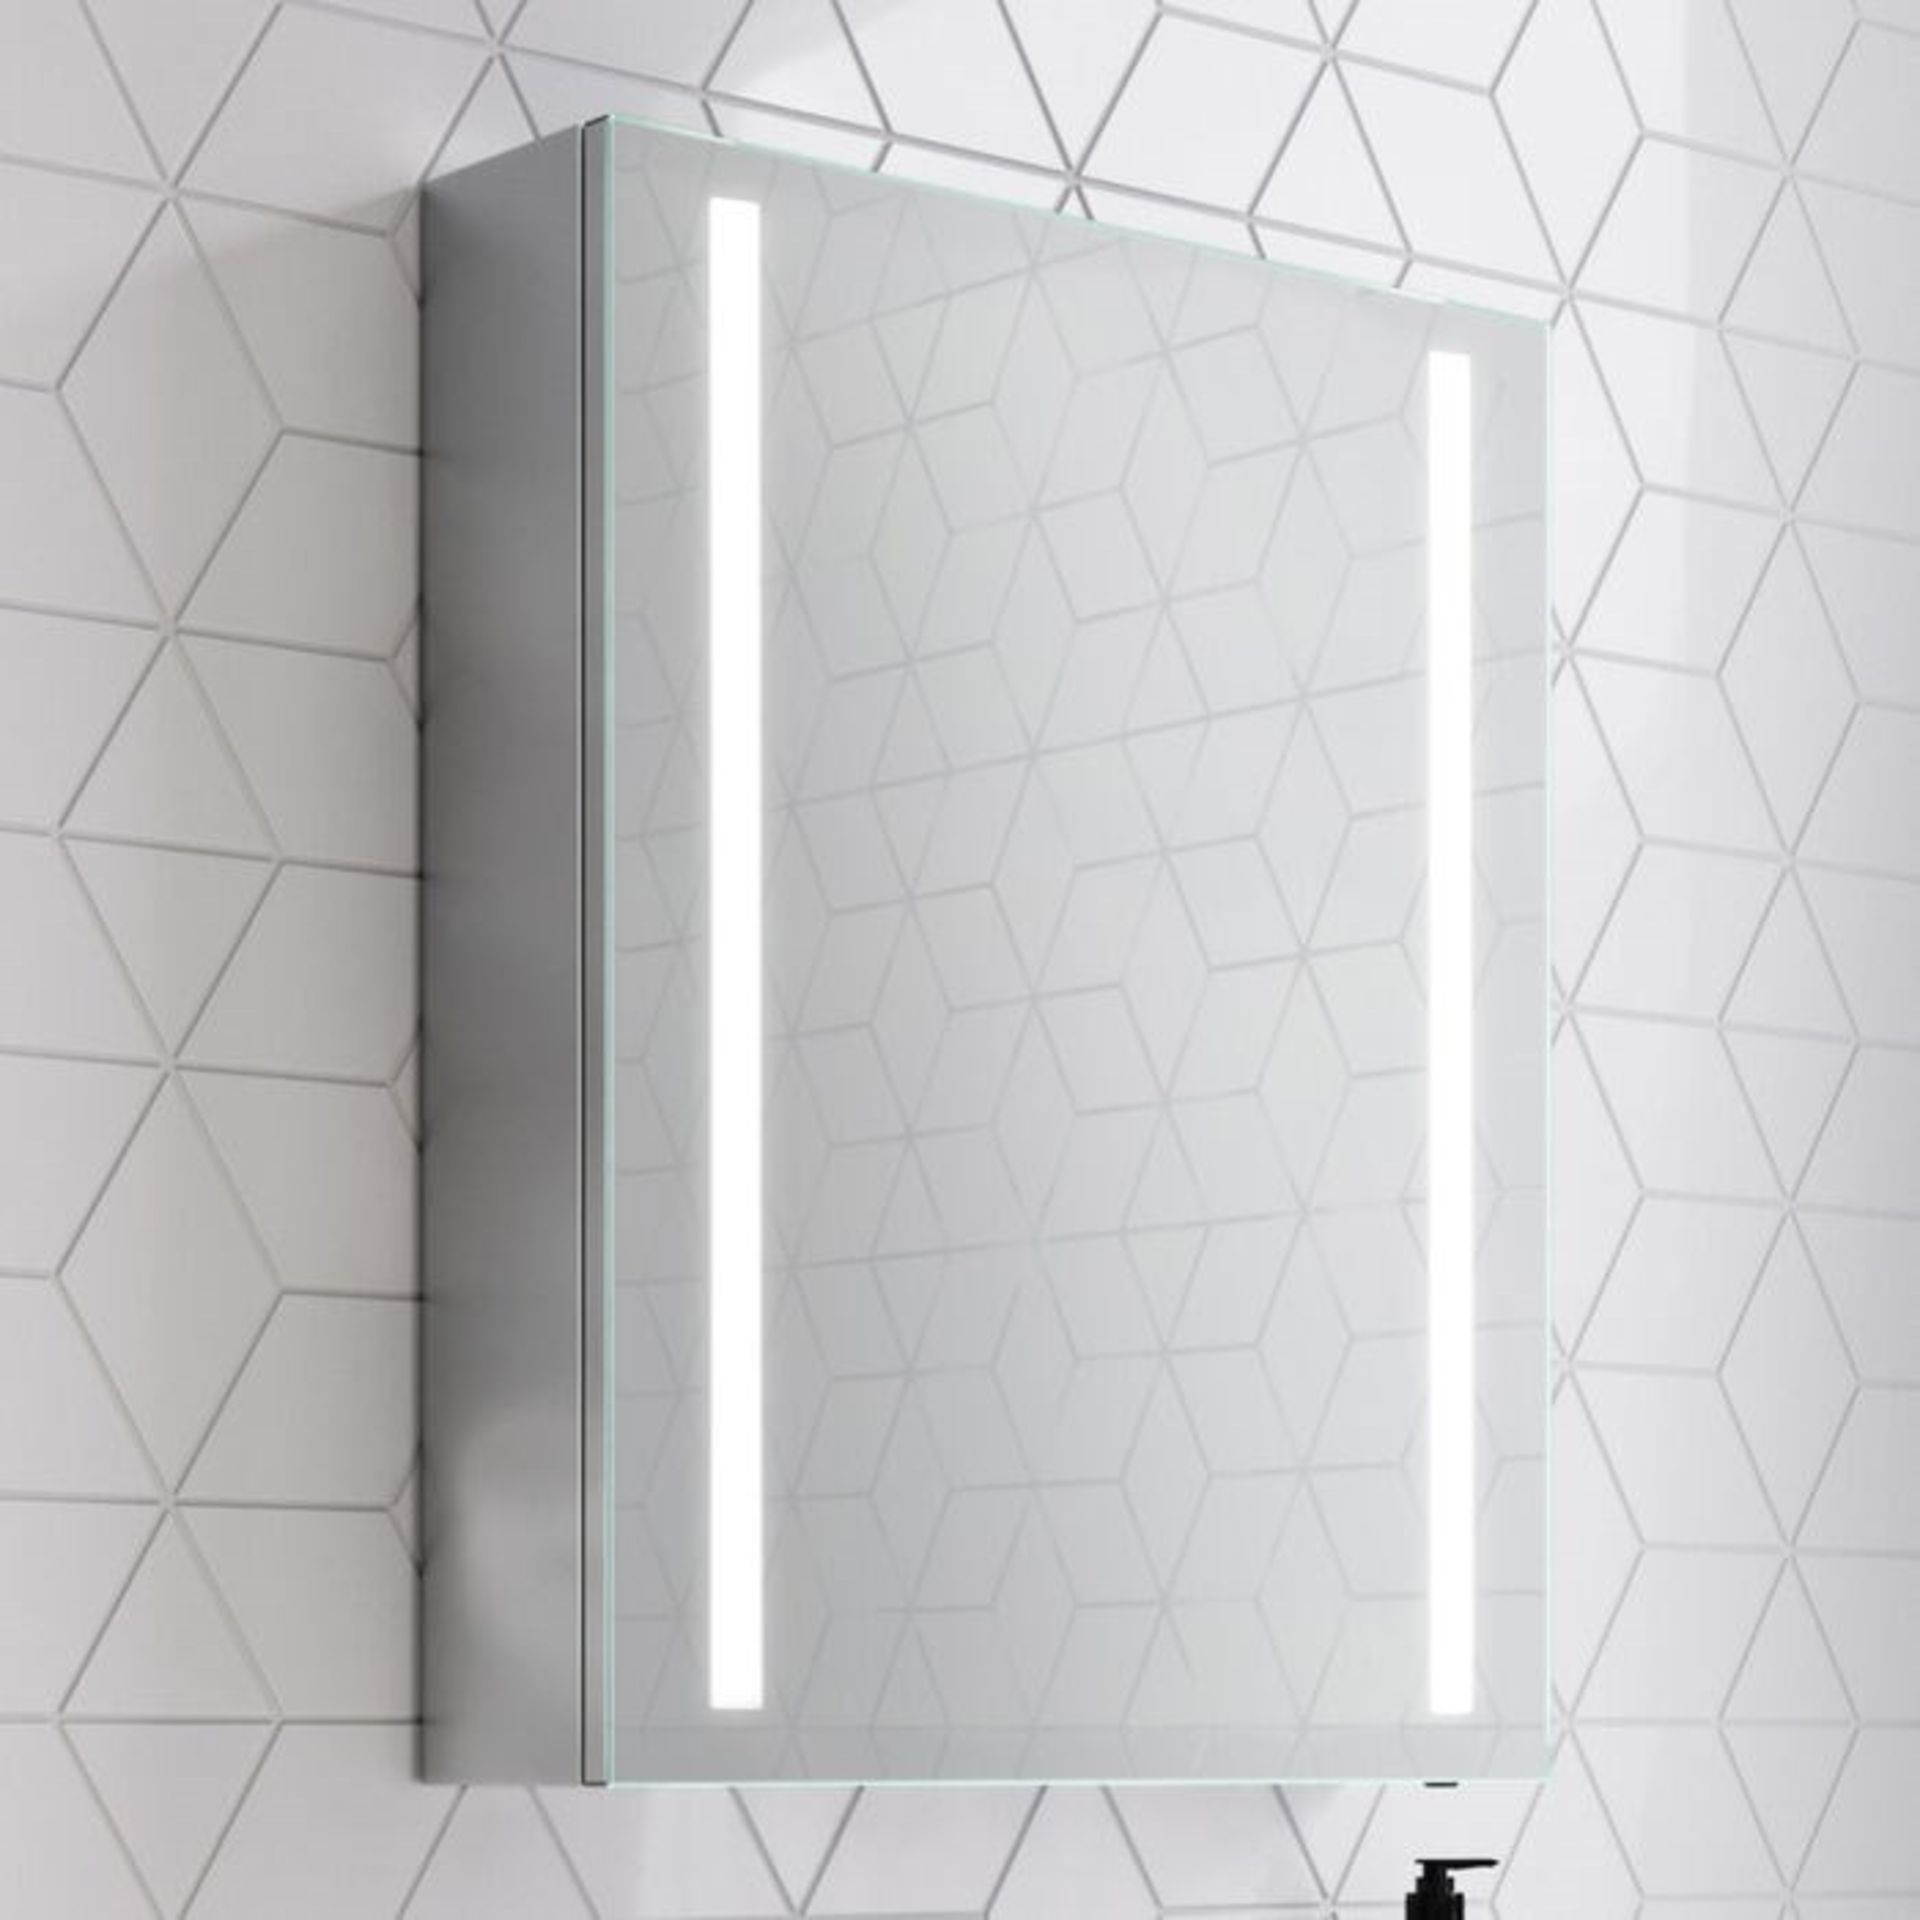 (RK2) 500x650mm Dawn Illuminated LED Mirror Cabinet. Energy efficient LED lighting, adding a c... - Image 2 of 5